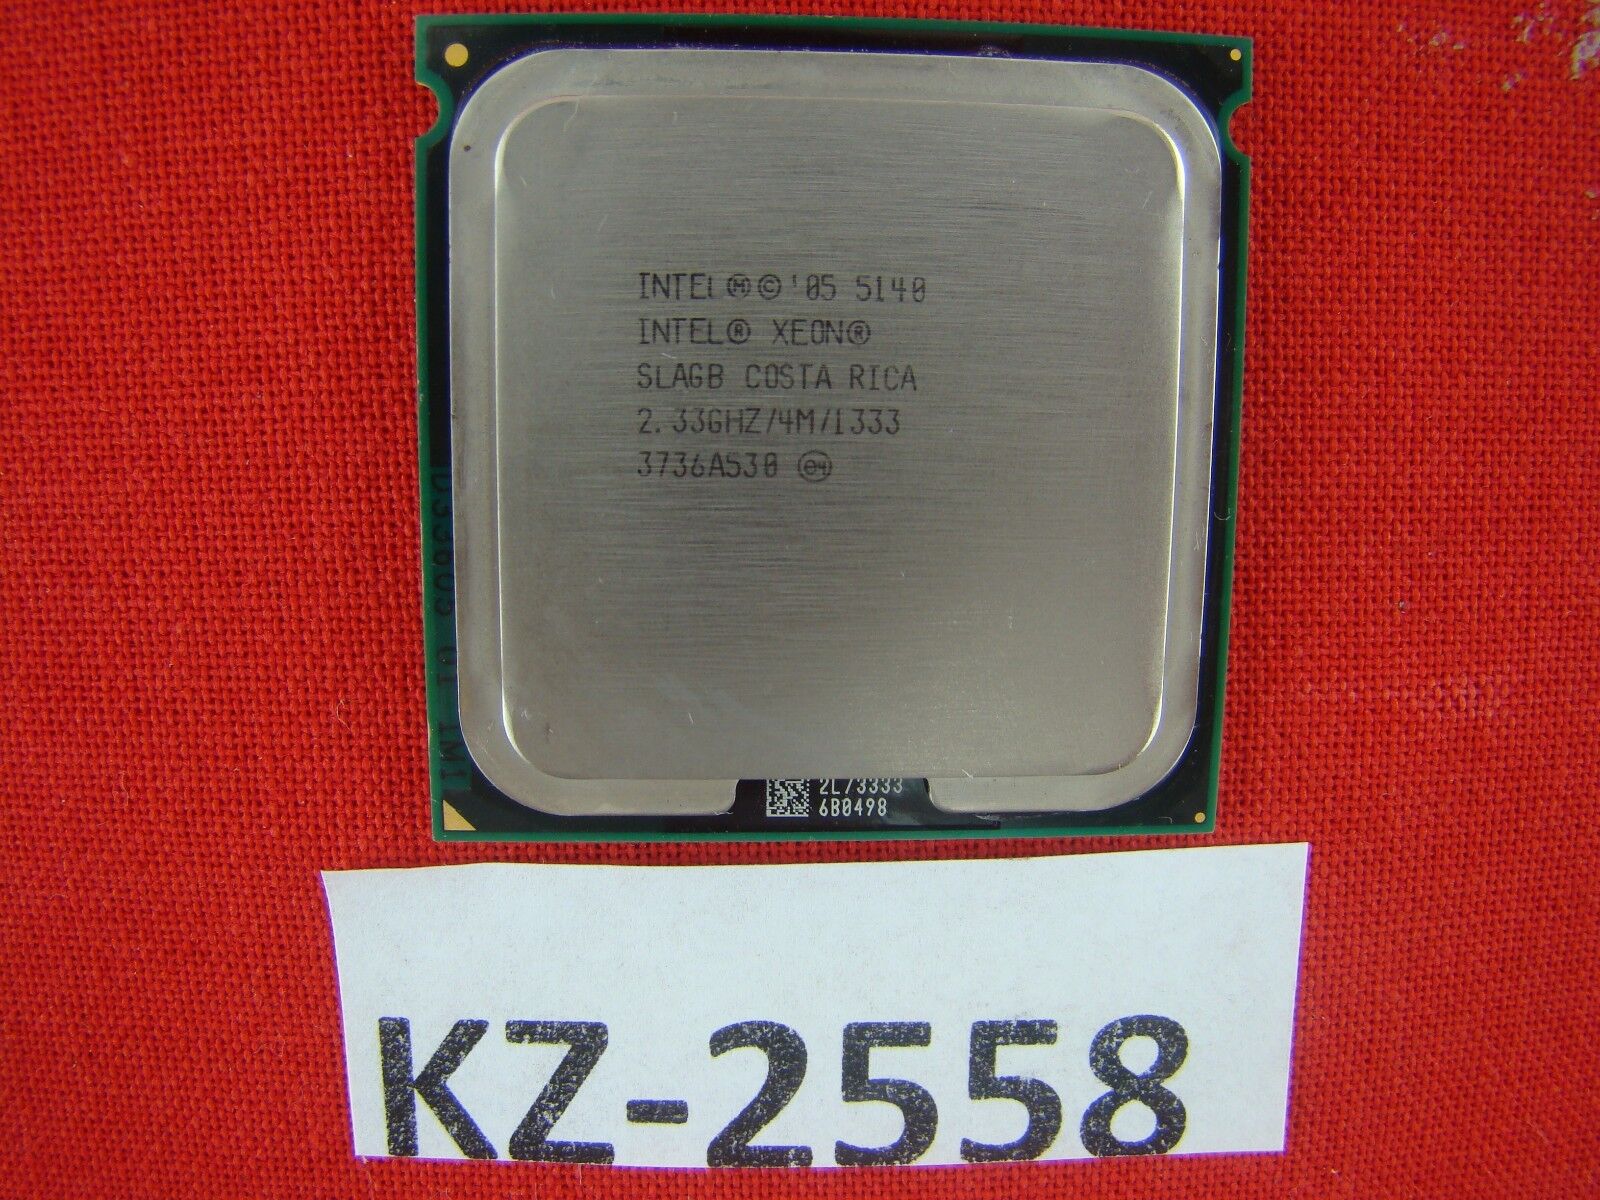 Intel Xeon 5140 Dual-Core 2333MHz/4M/1333 - SLAGB Costa Rica #